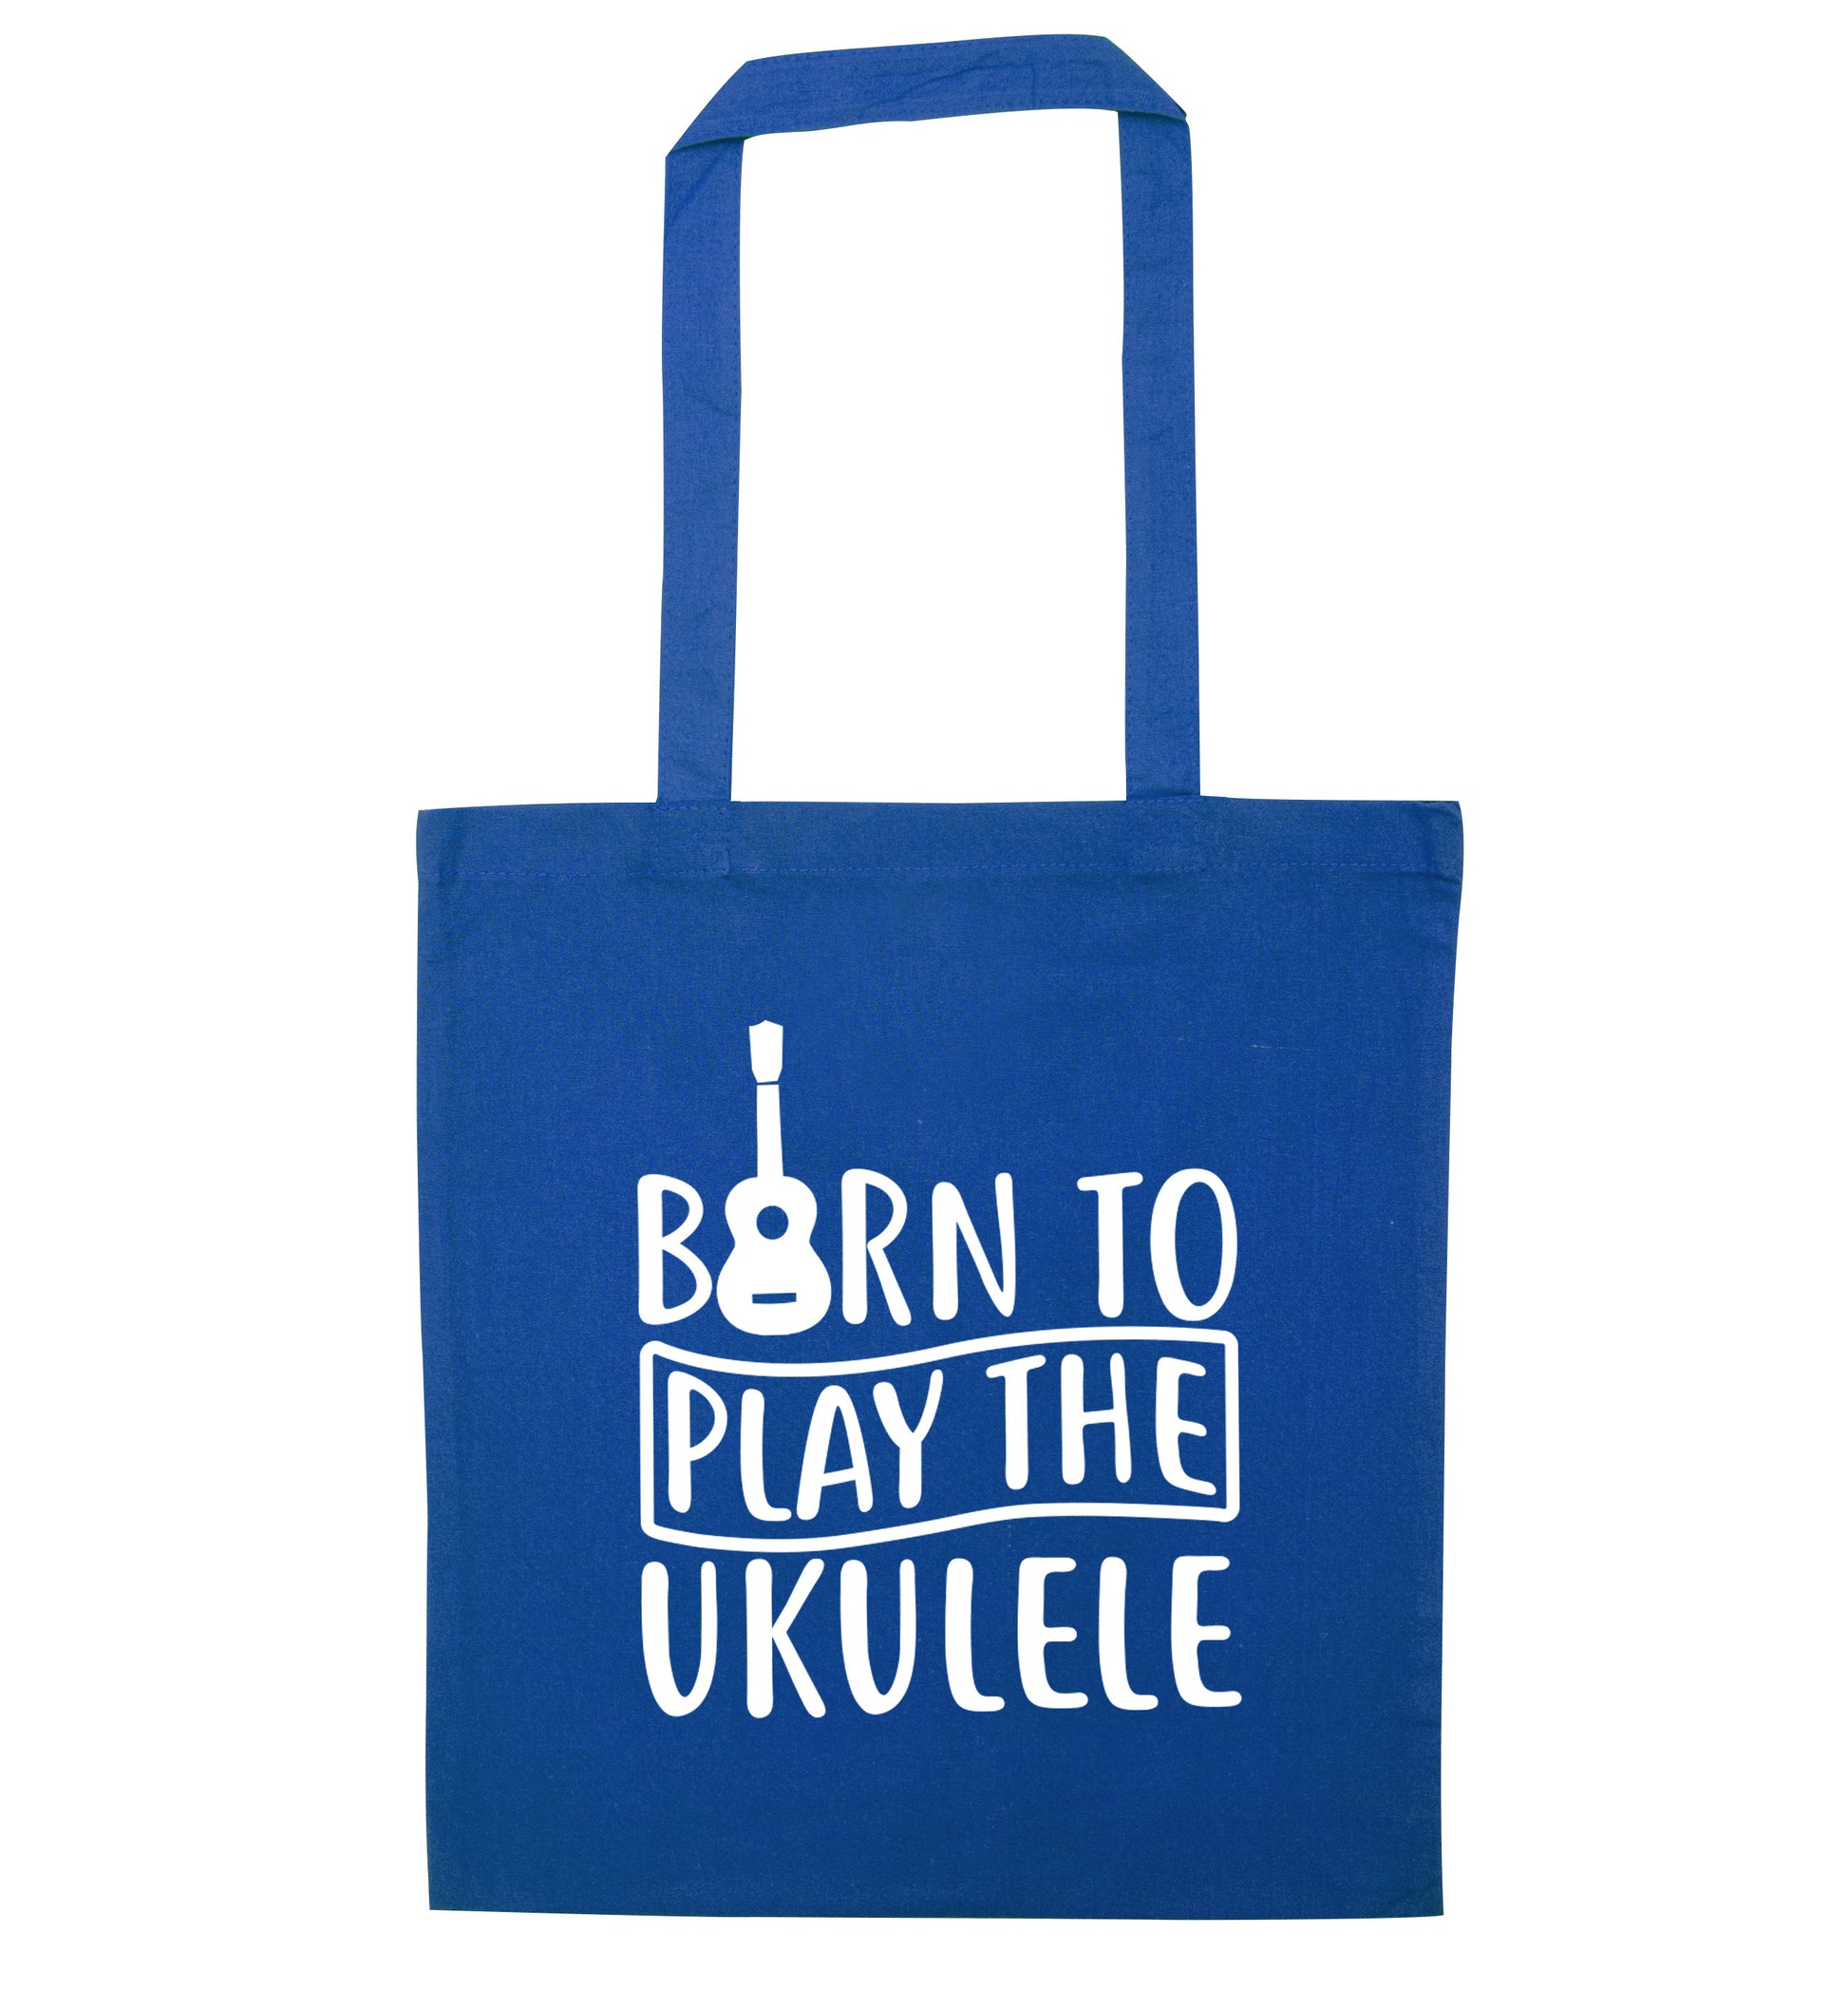 Born to play the ukulele blue tote bag